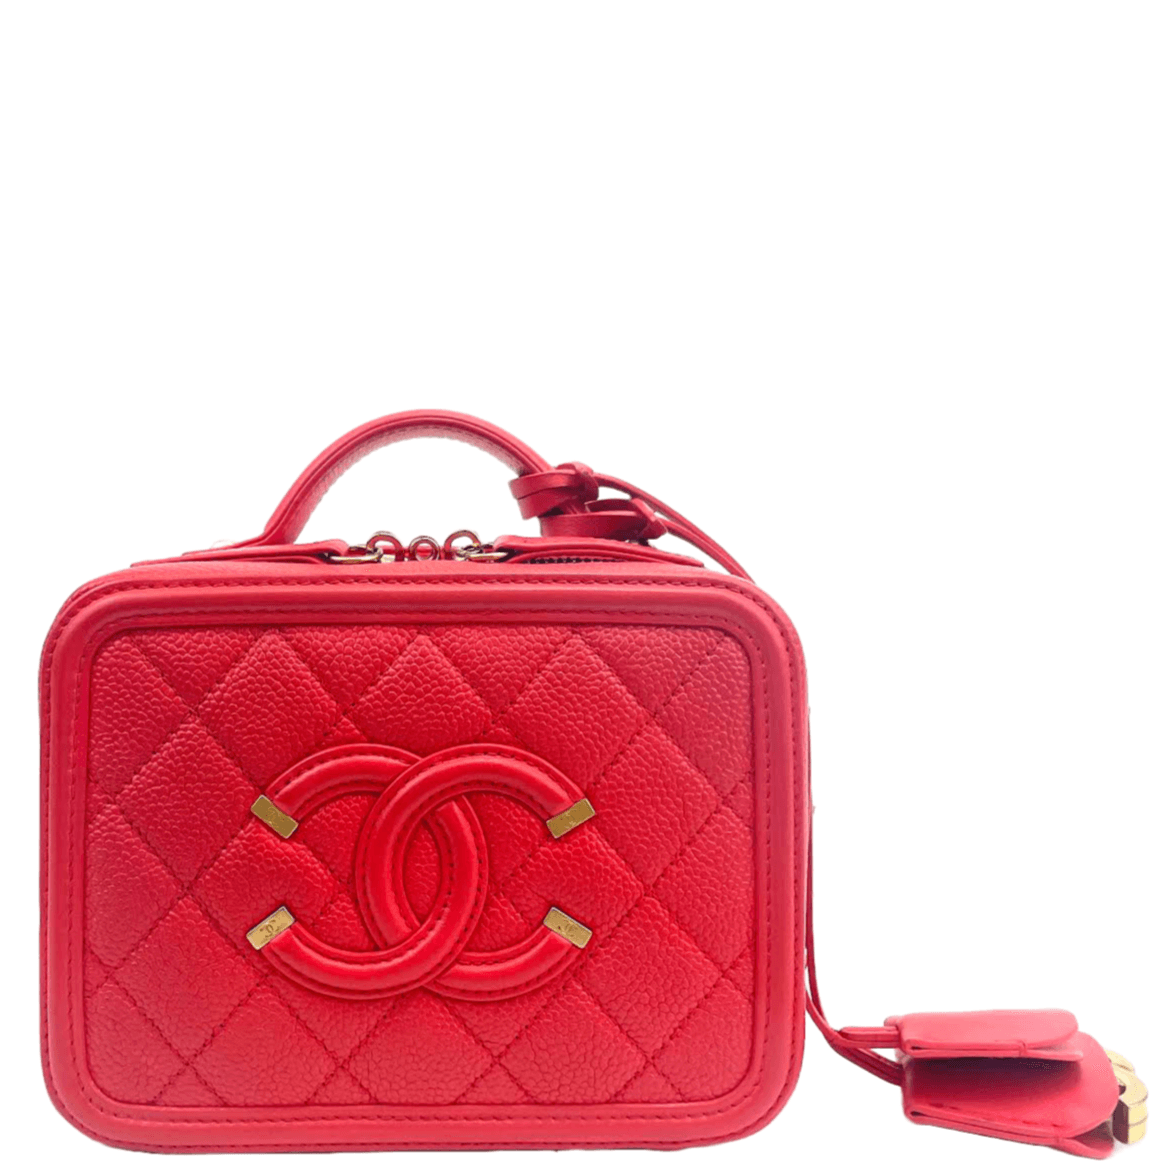 Chanel Handbag Cc Pink Timeless Tall Vanity Case